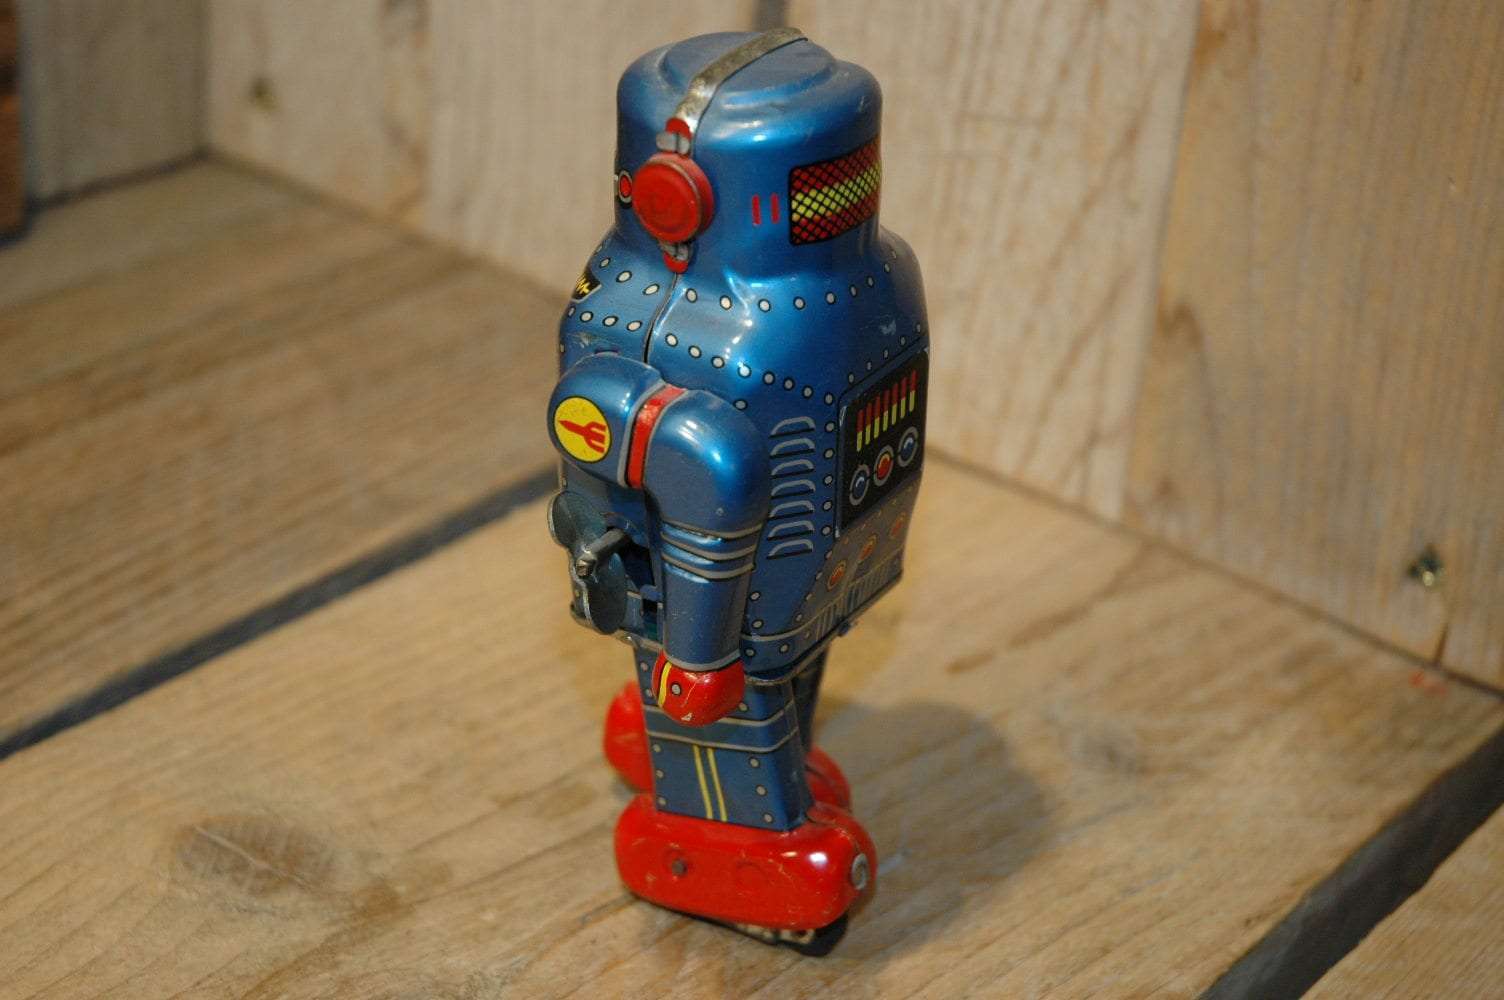 frankonia - Sparky Robot